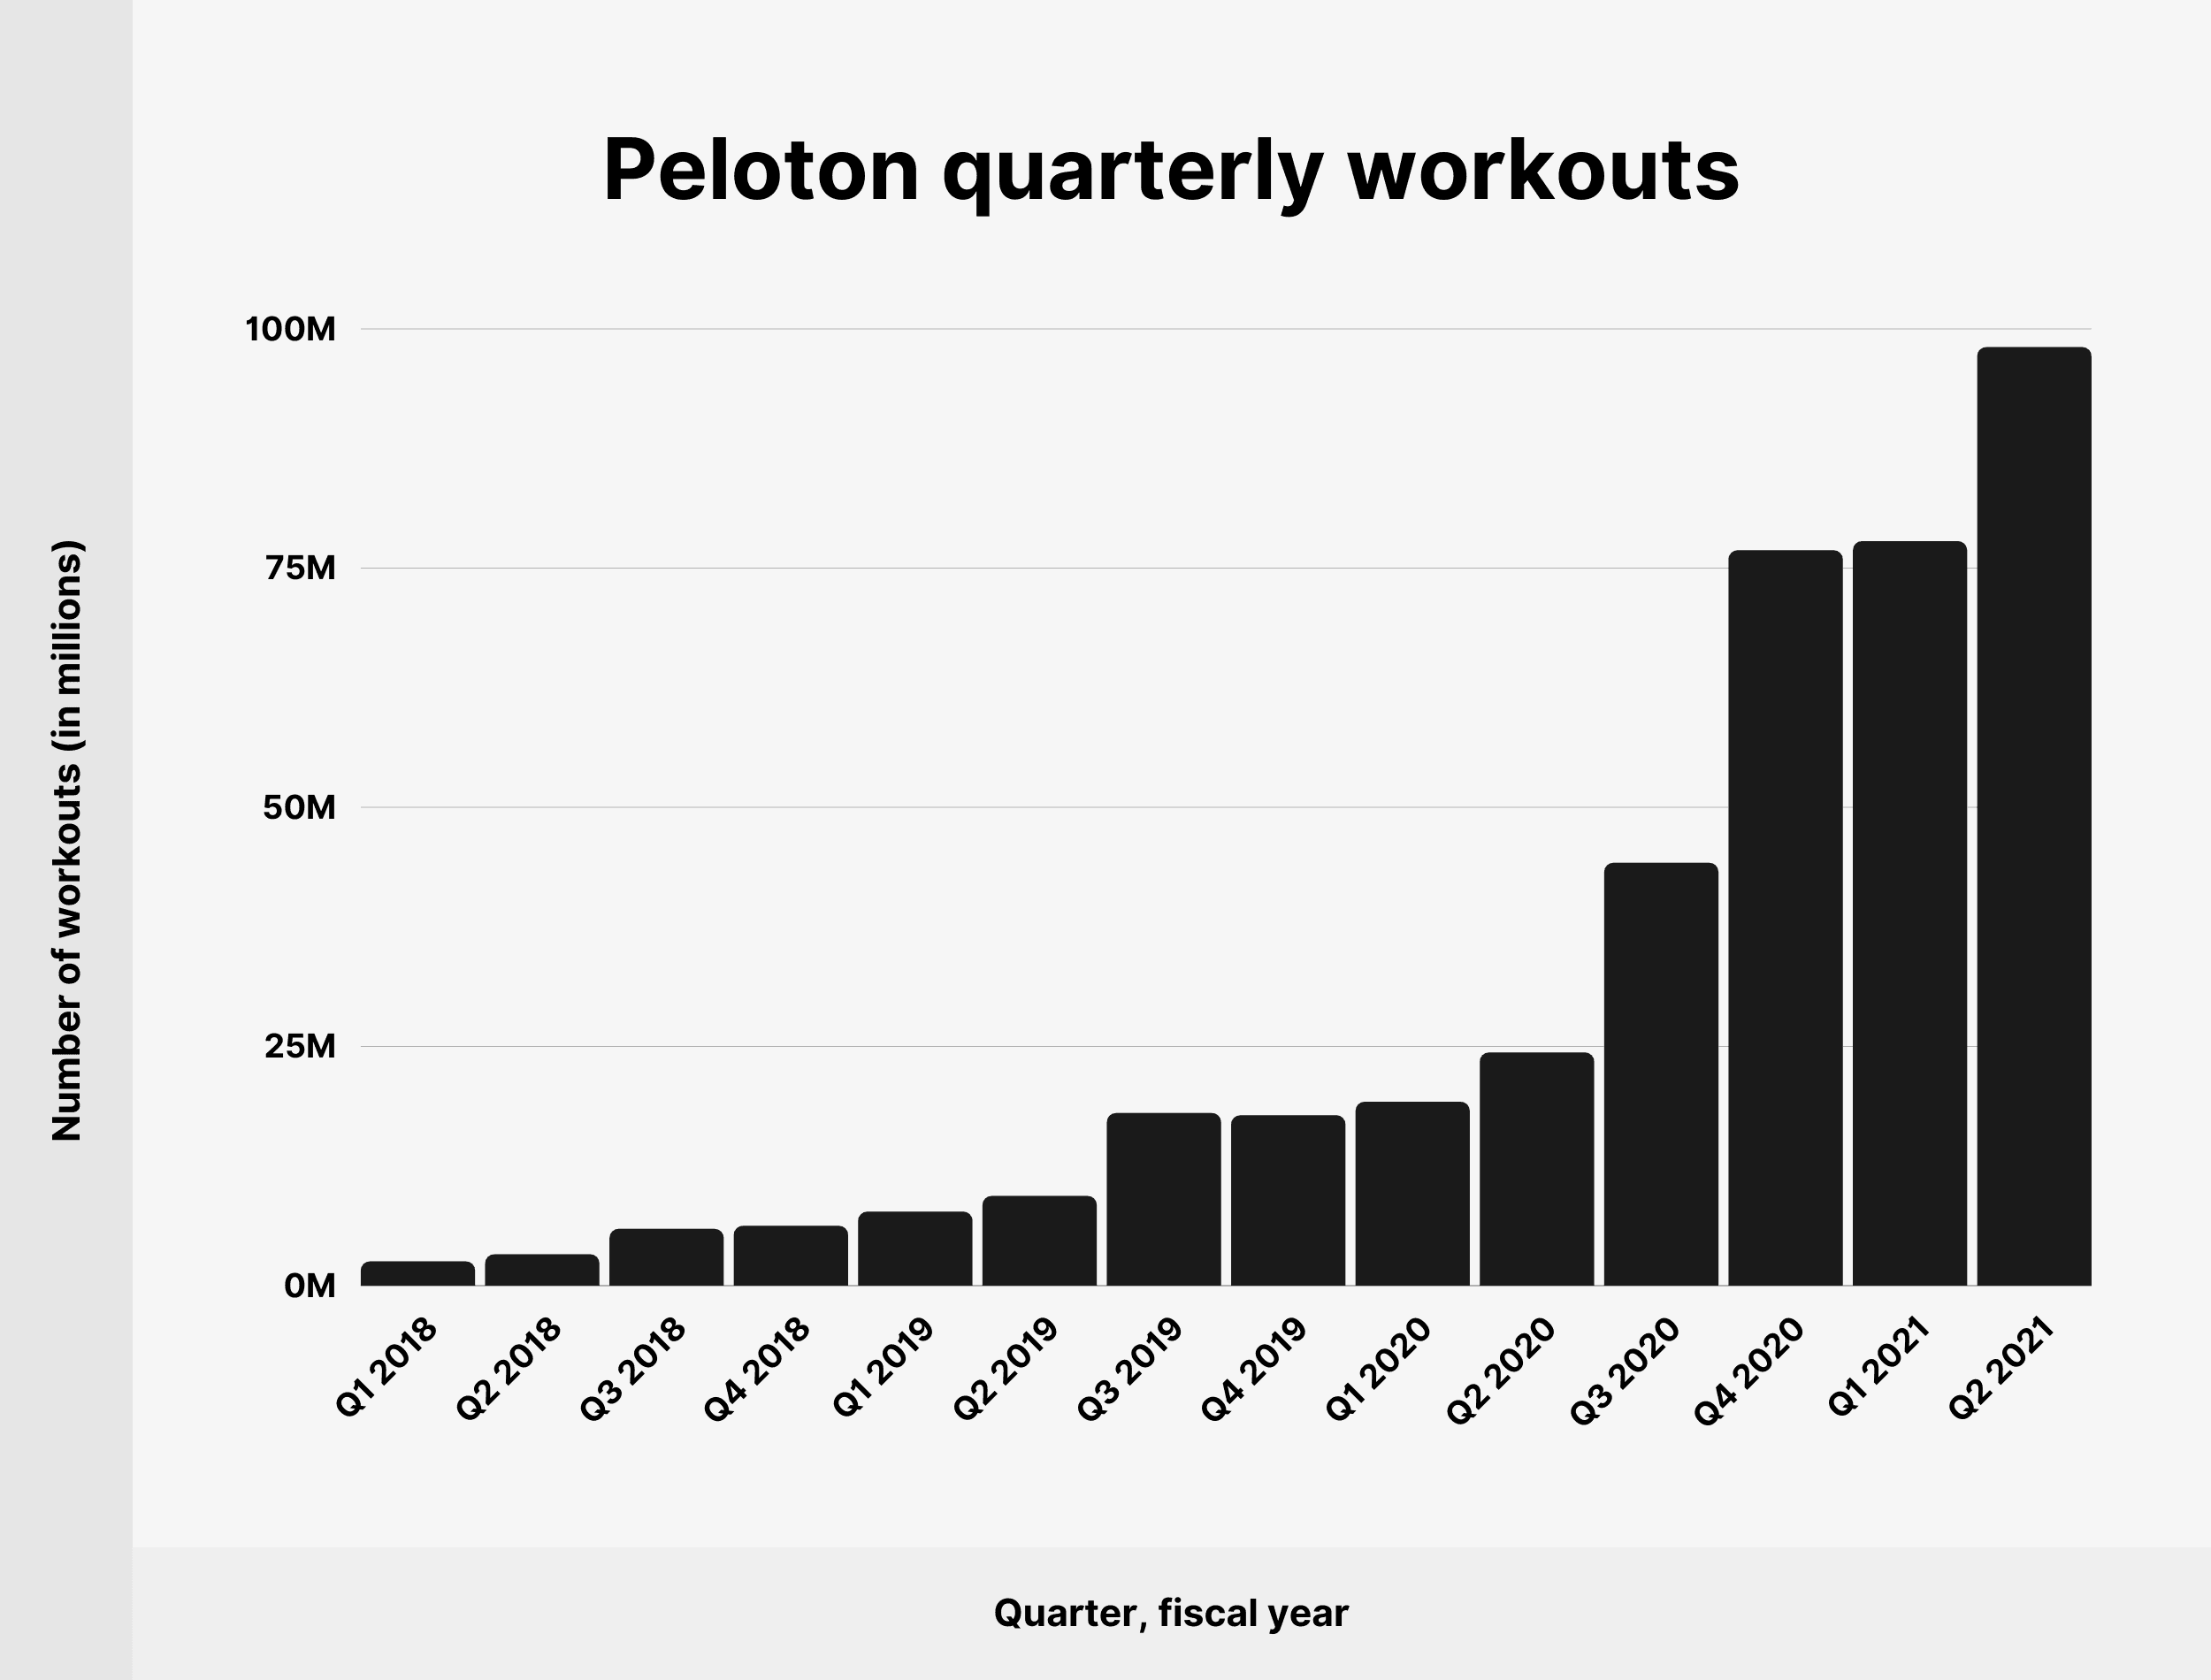 Peloton quarterly workouts